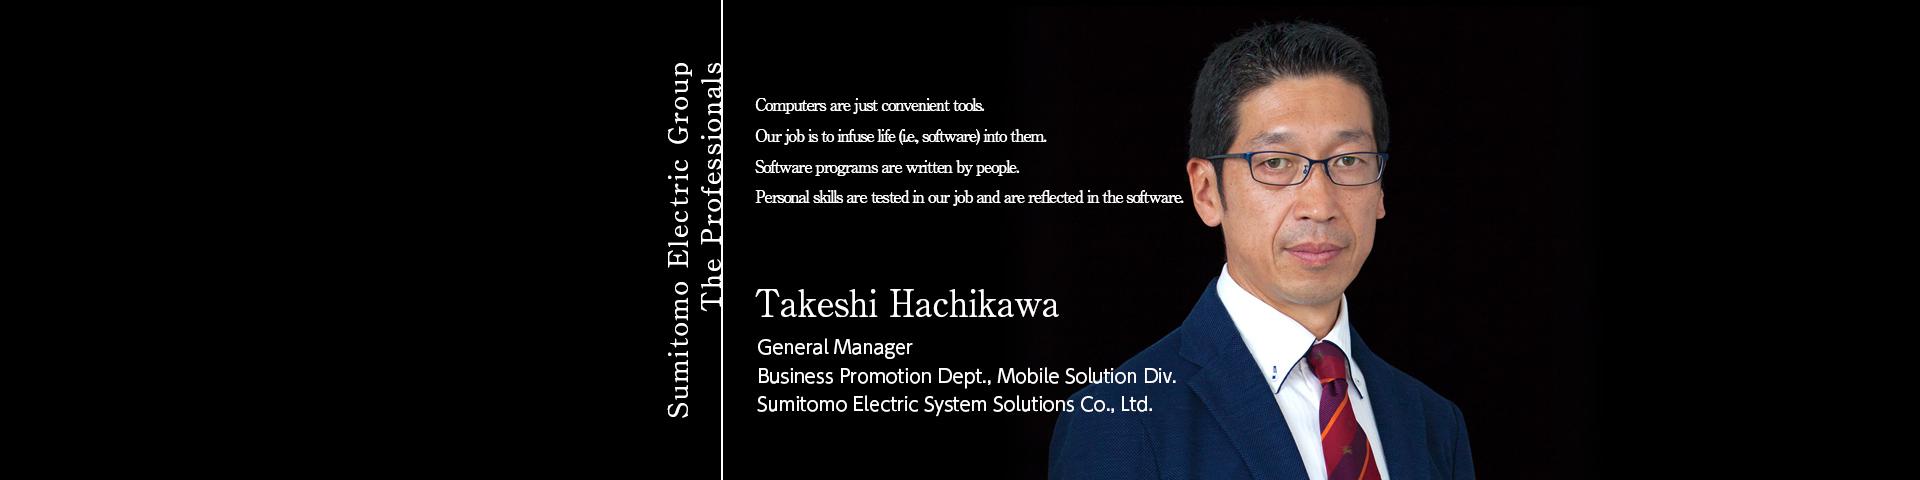 Takeshi Hachikawa